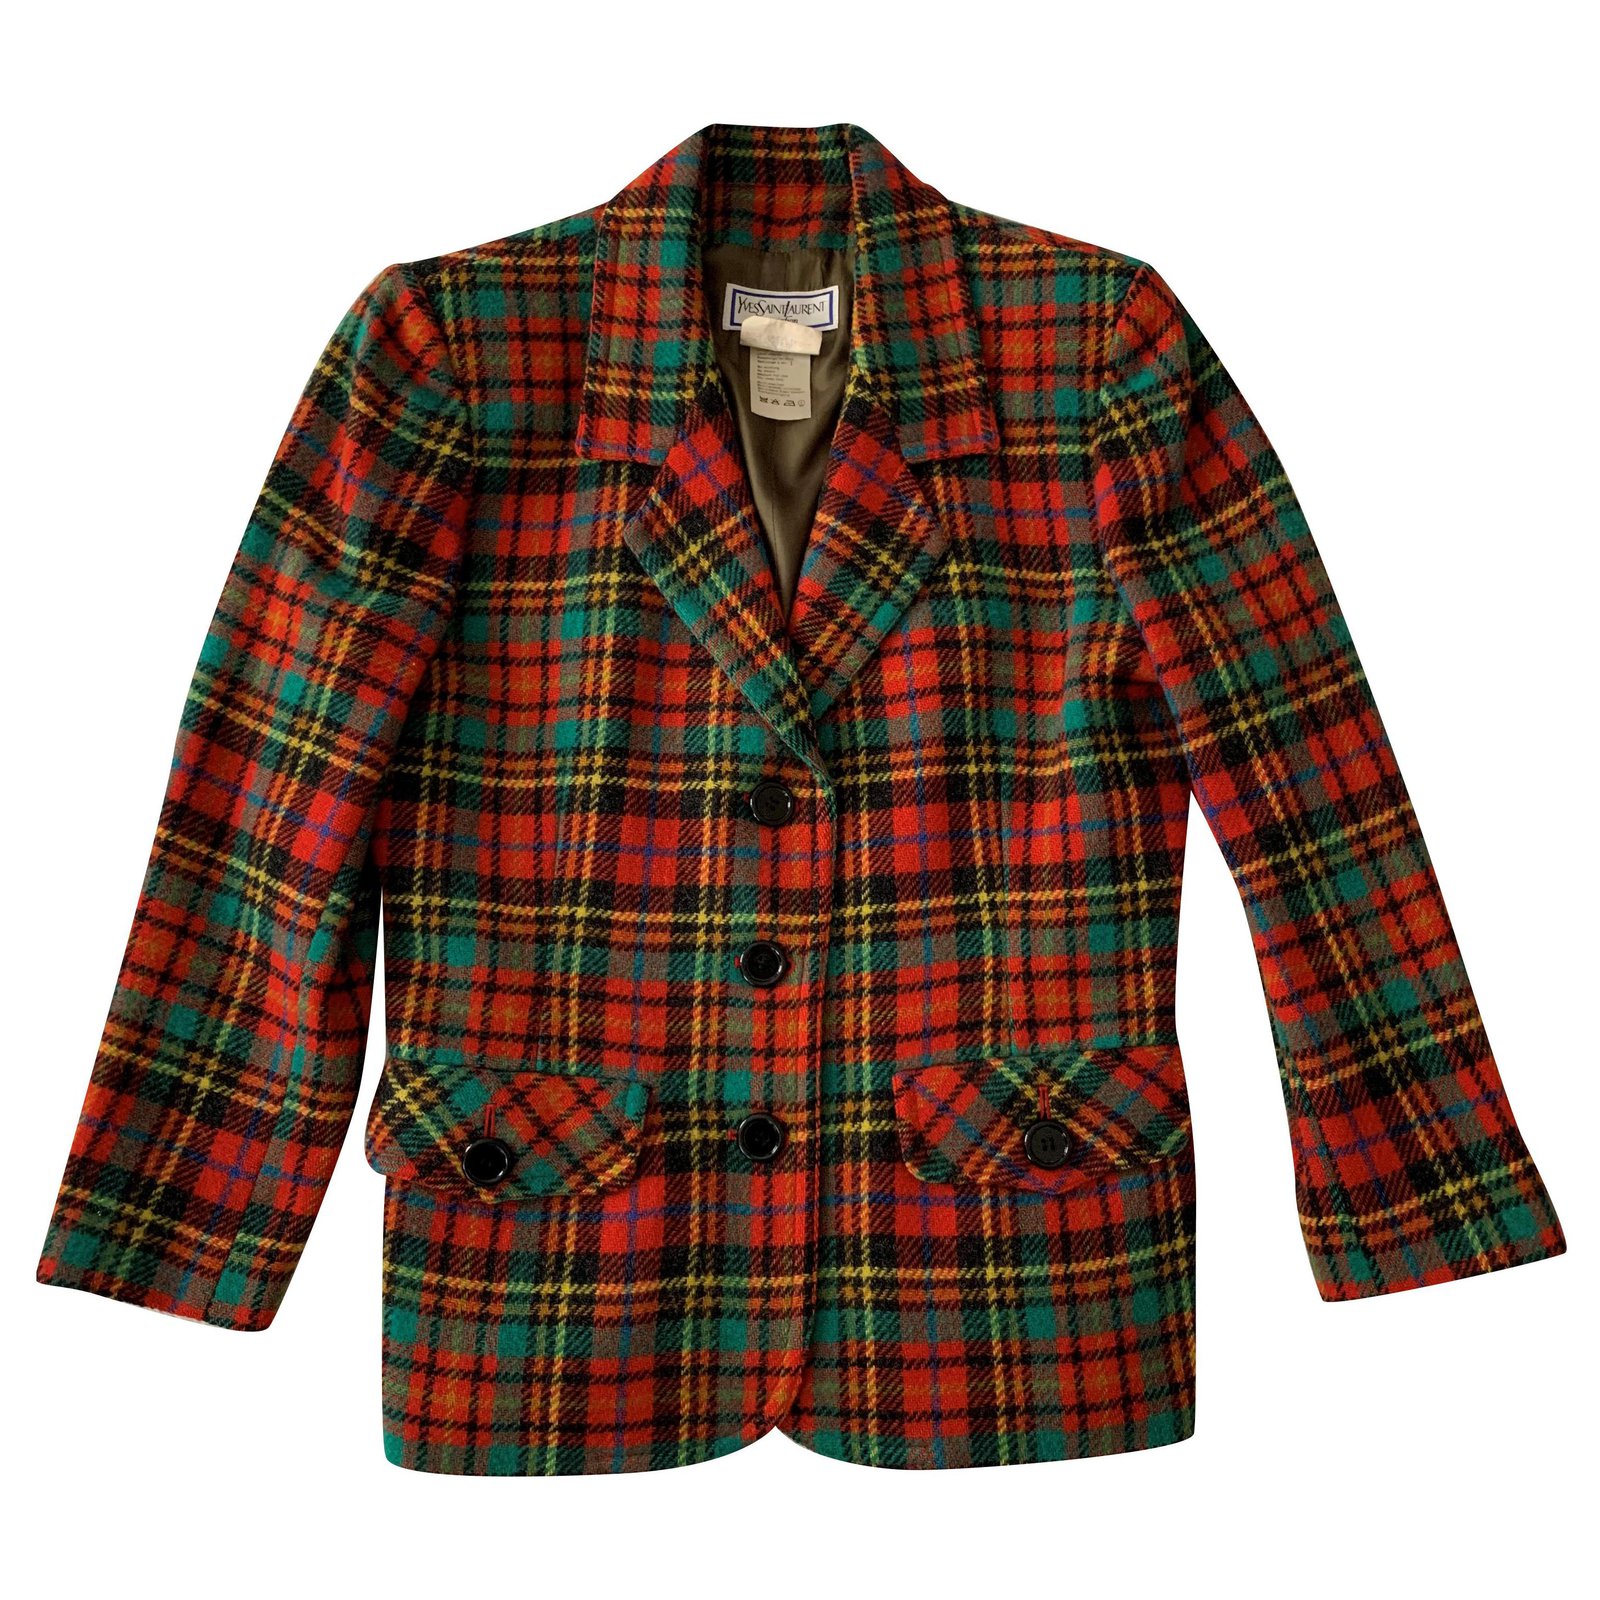 Vintage wool checks blazer jacket